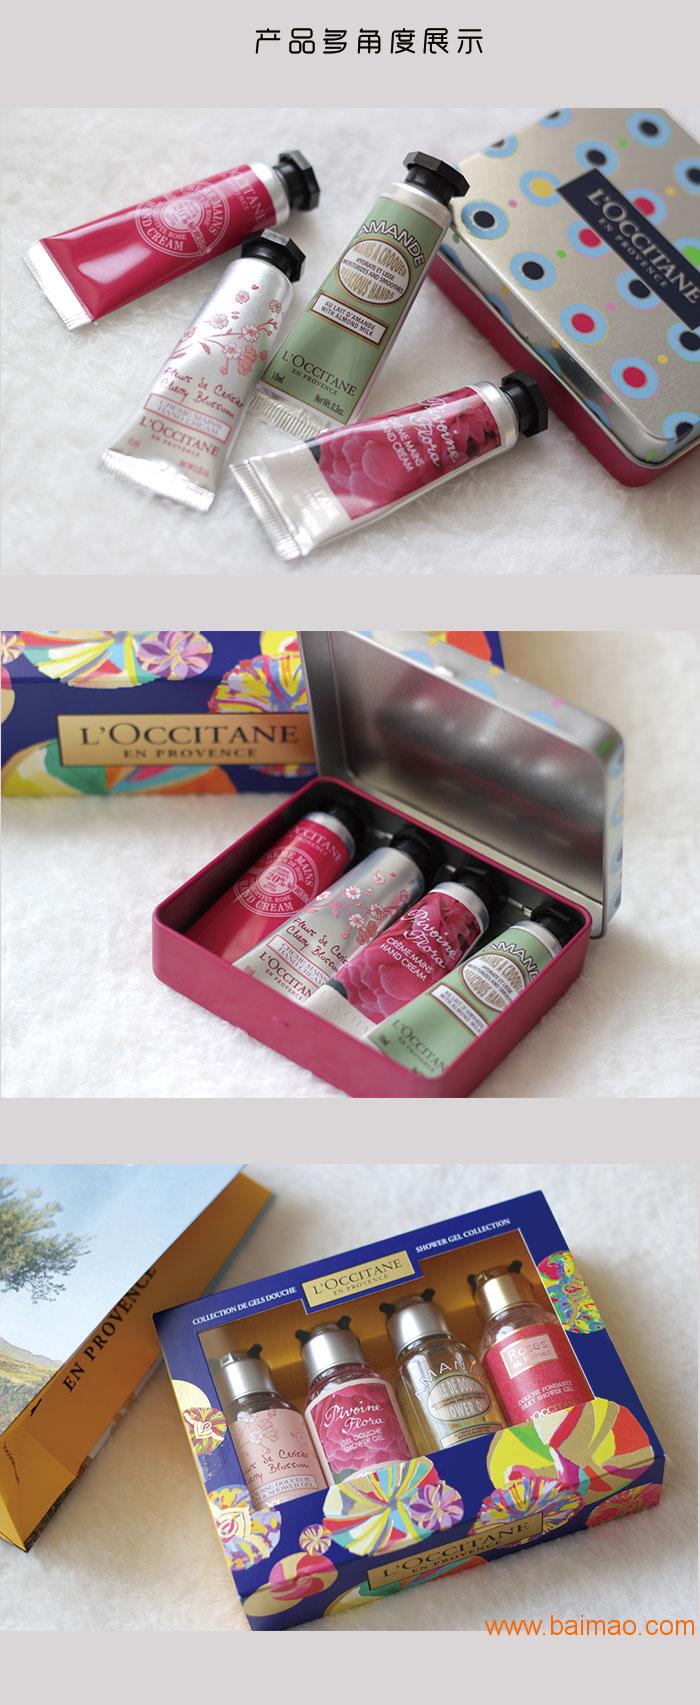 L'OCCITANE 精油盒 精油包装 上海精油包